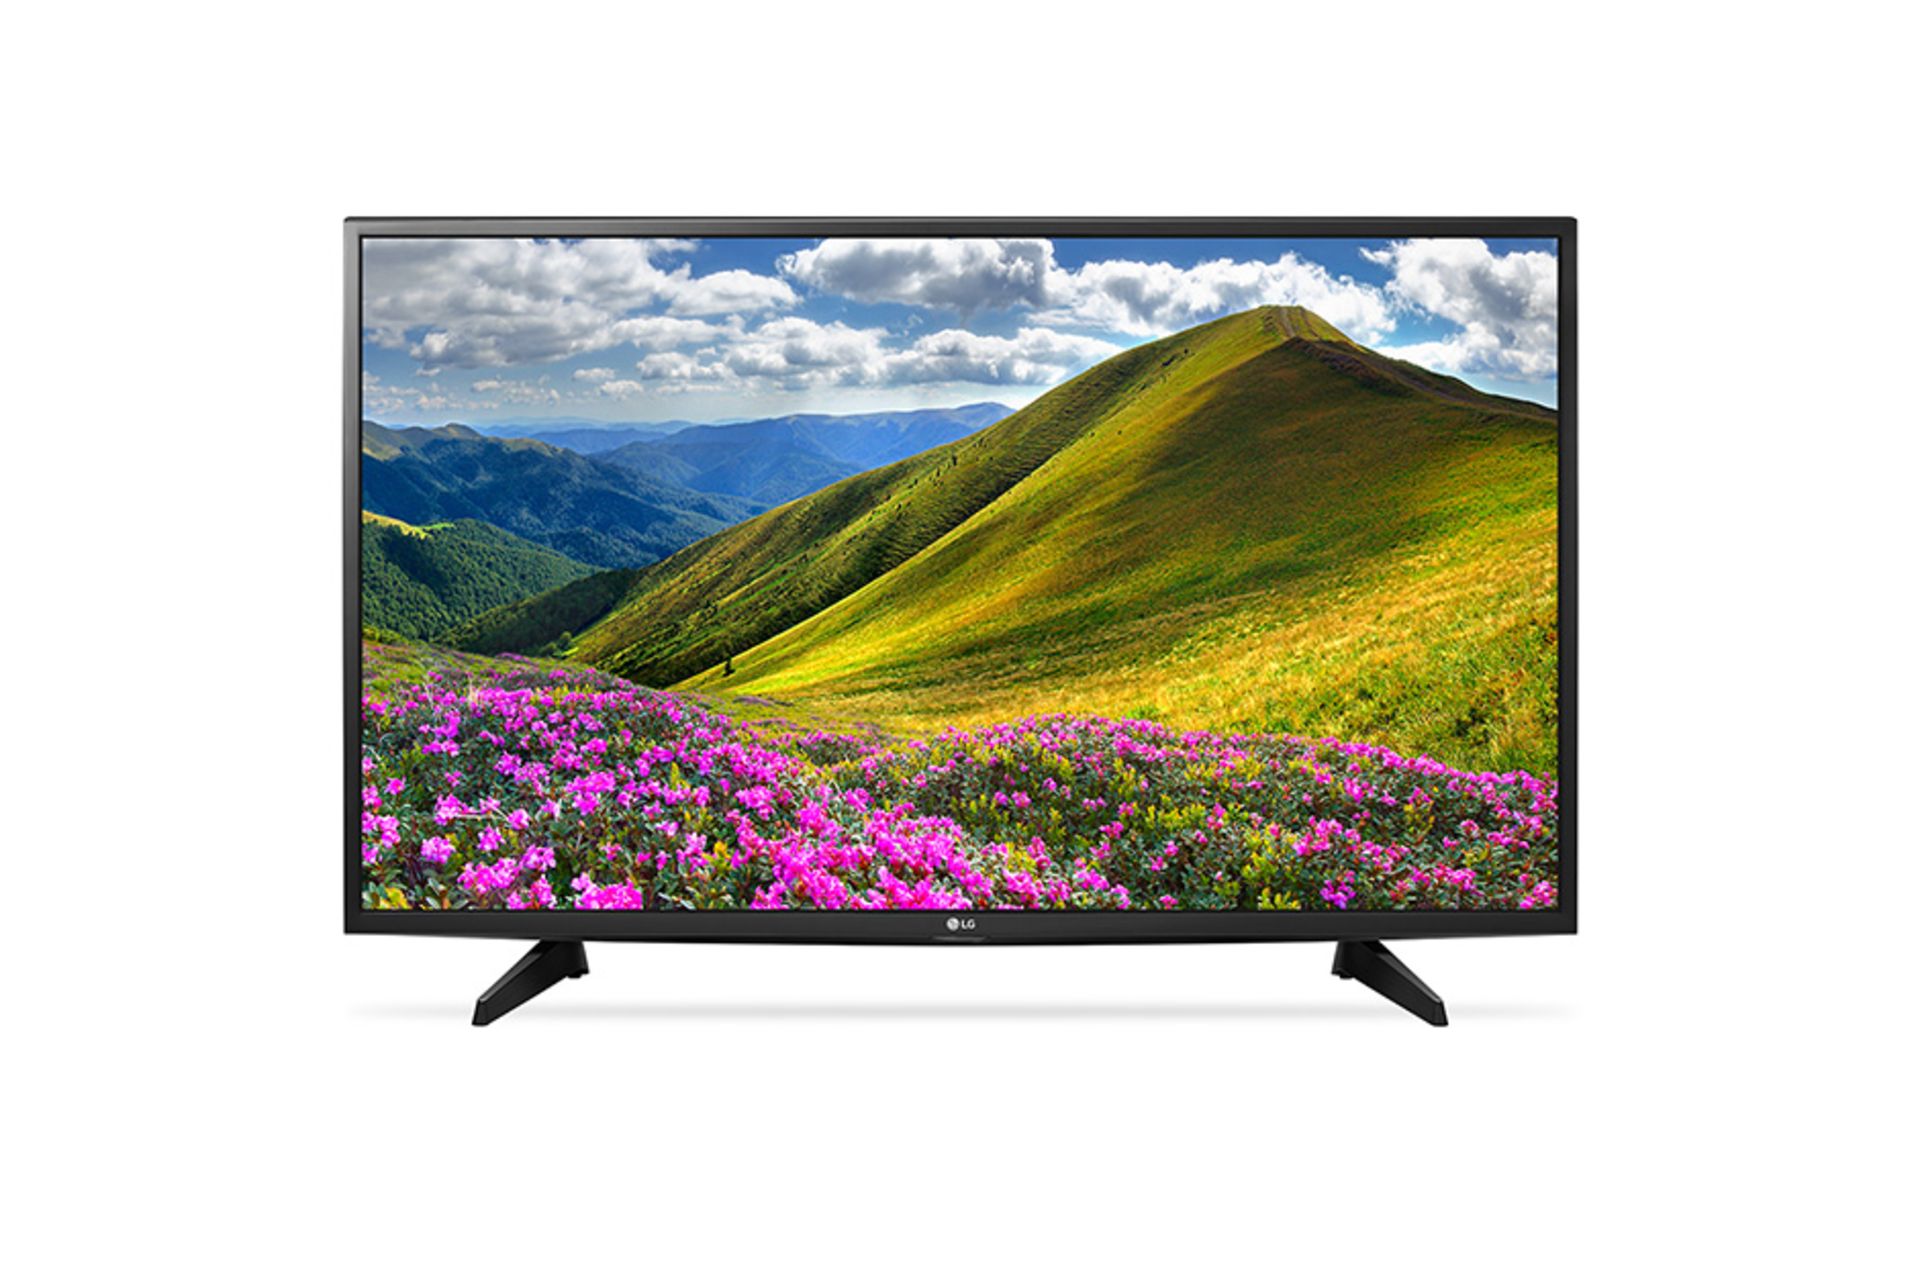 V Brand New LG 49 Inch FULL HD LED TV WITH FREEVIEW HD 49LJ515V